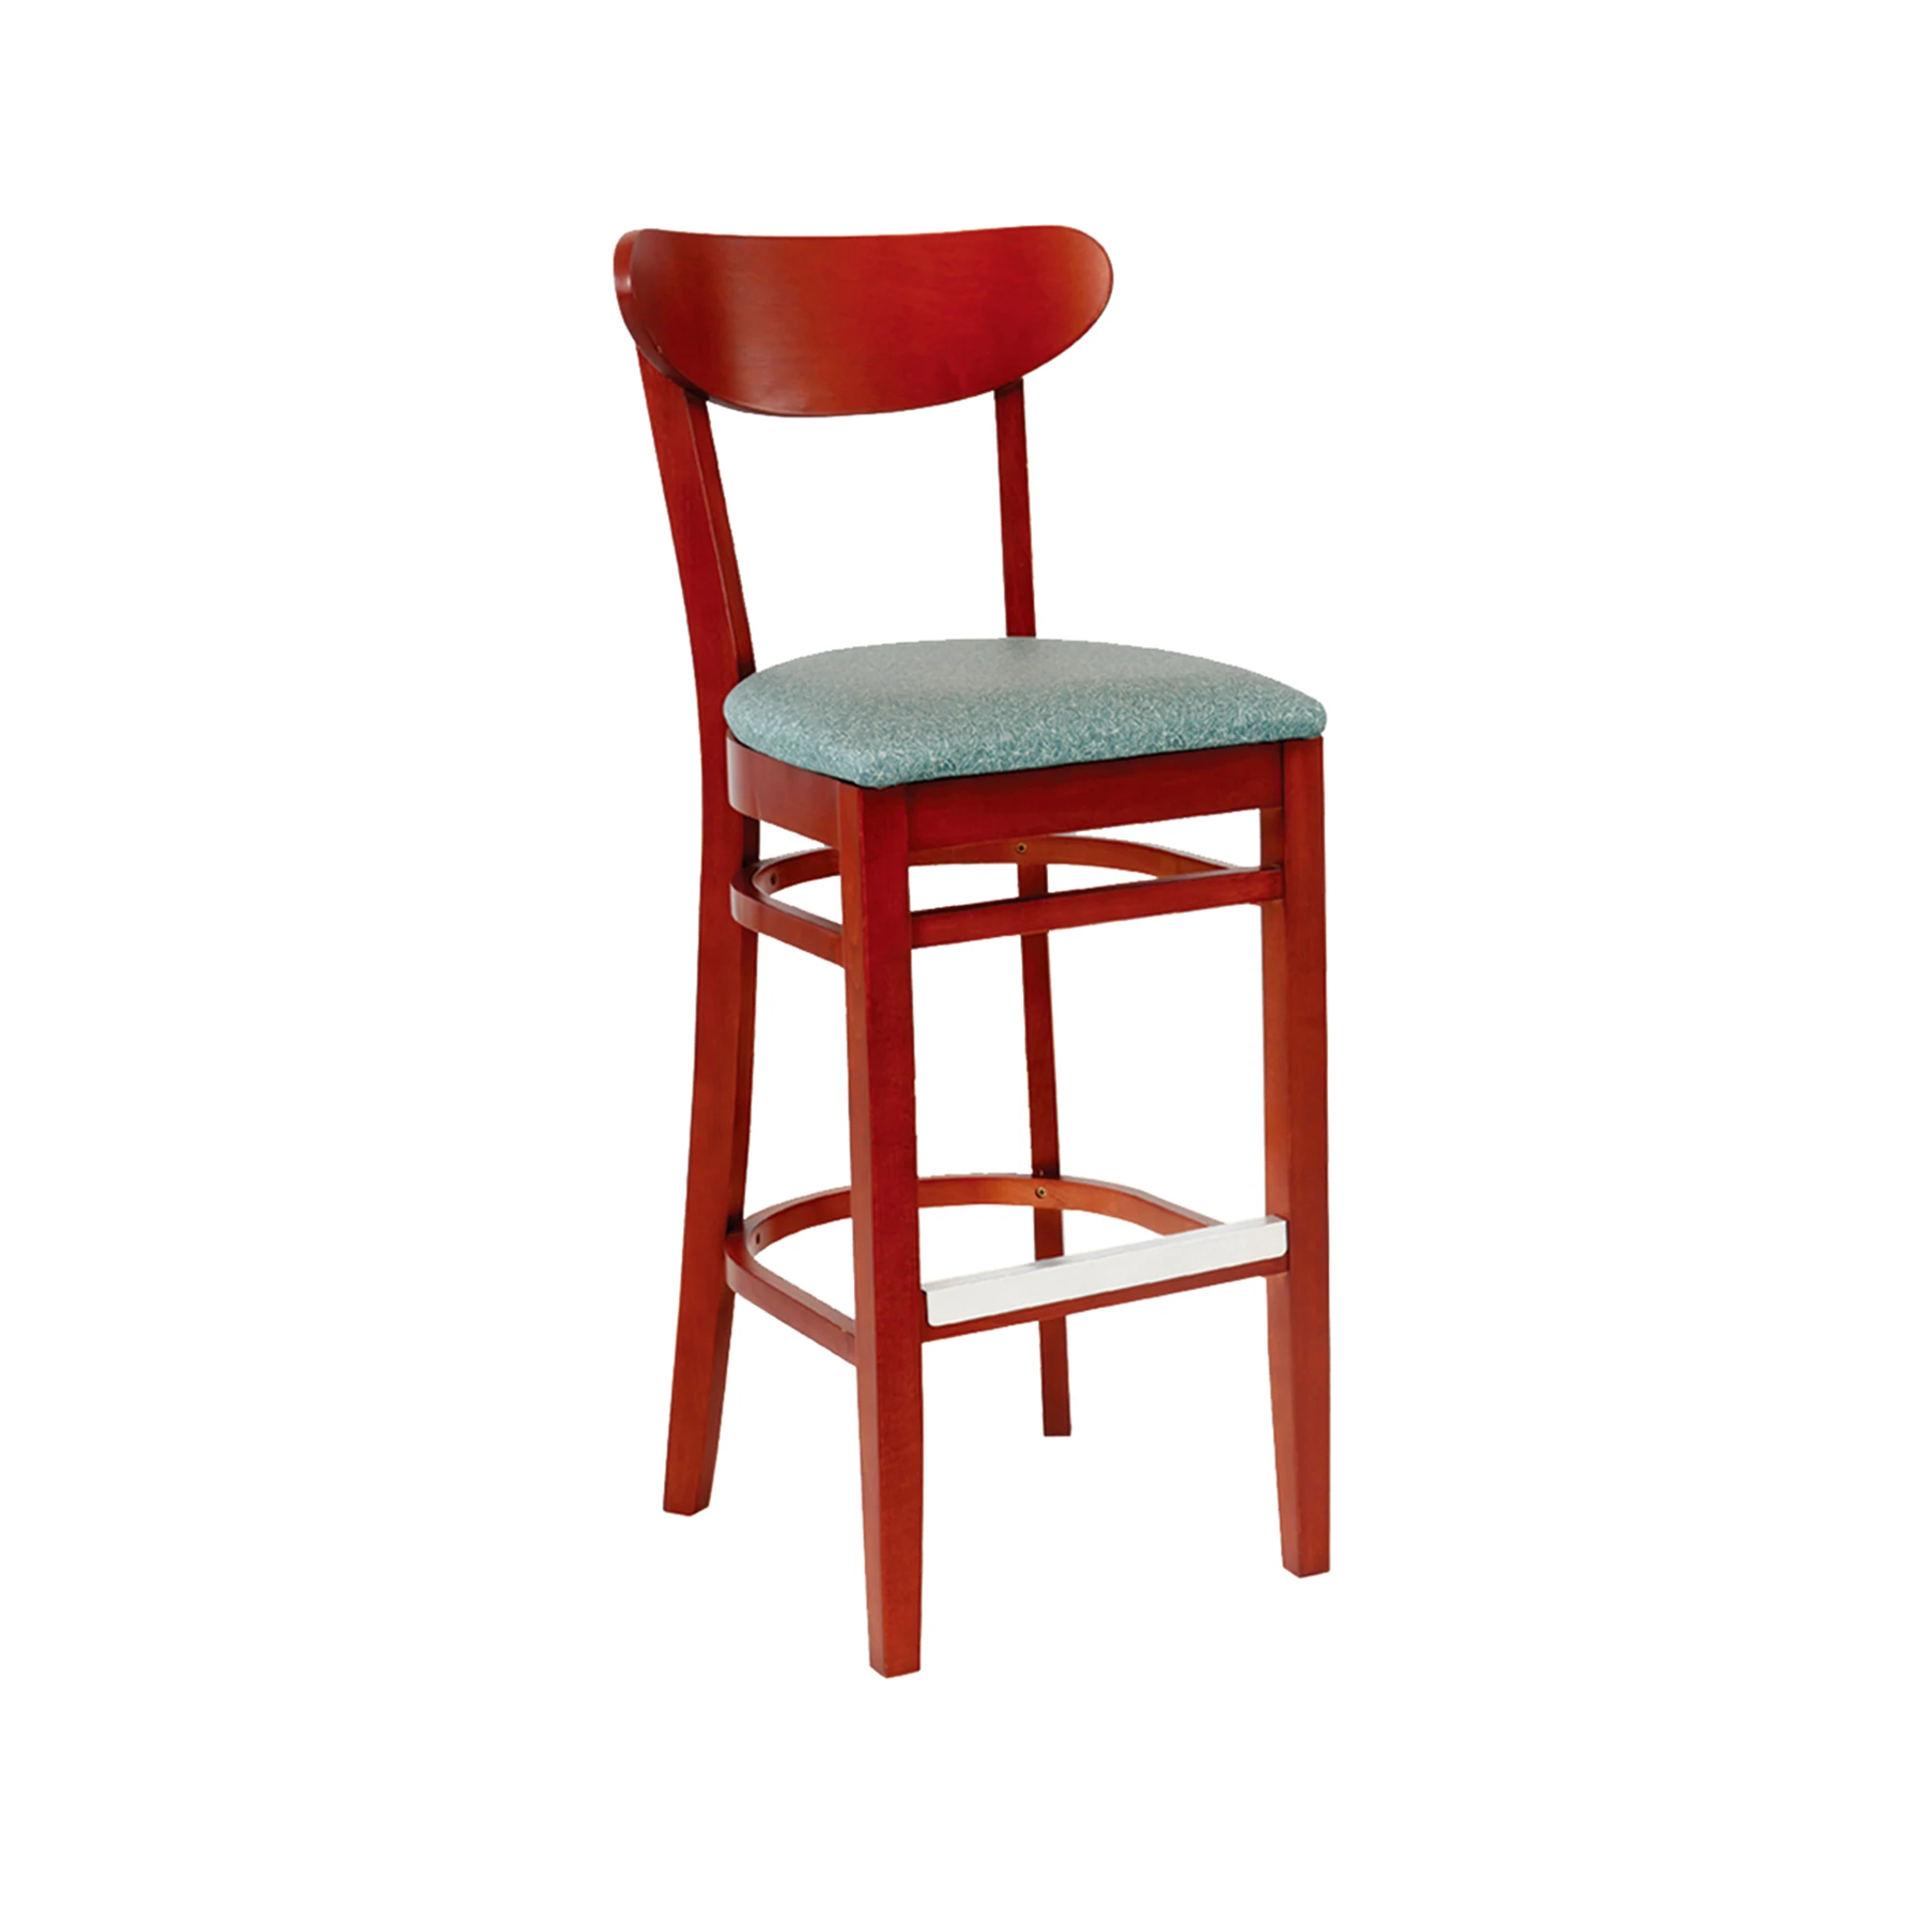 Dg W0009b Solid Wooden Tall Used Bar High Chair Buy Bar High